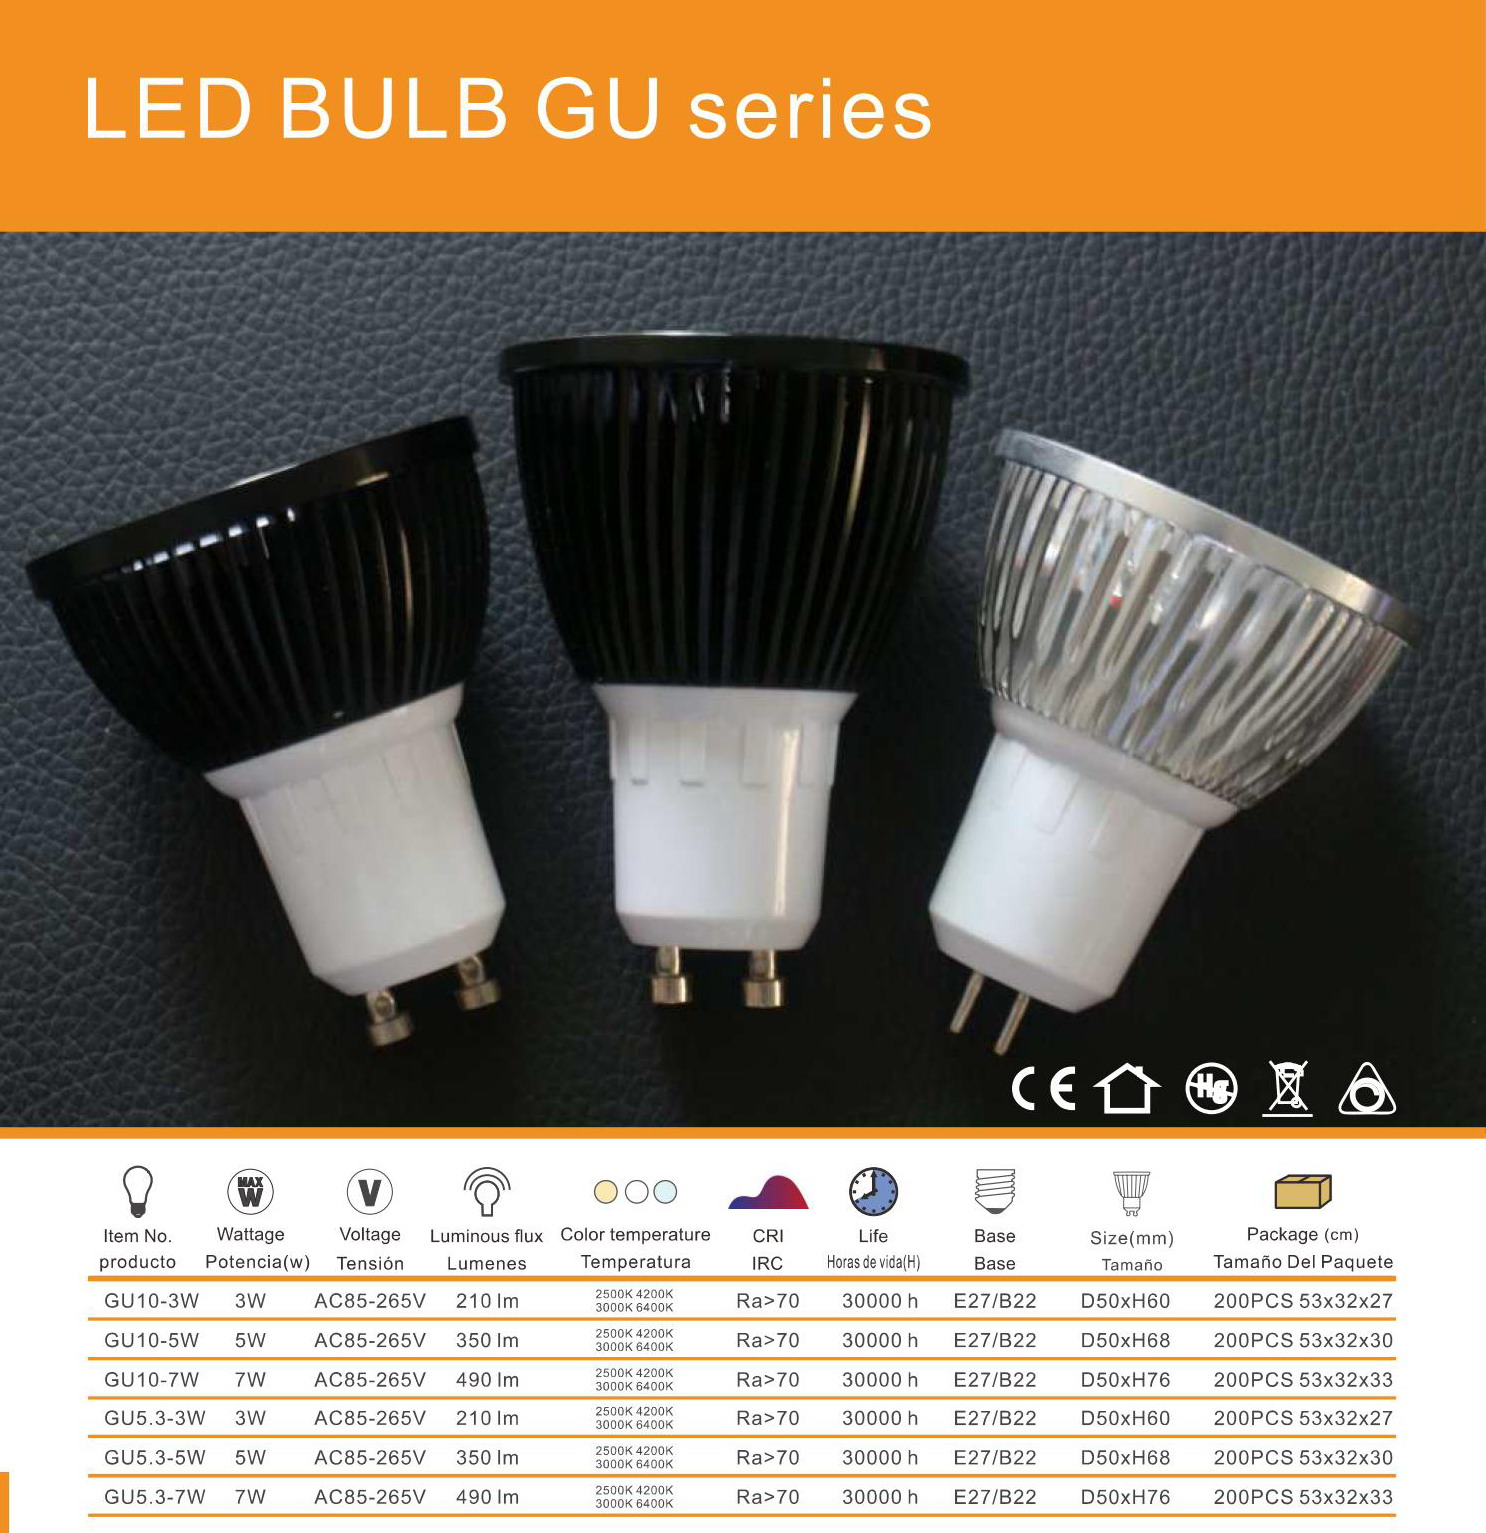 LED BULB GU series